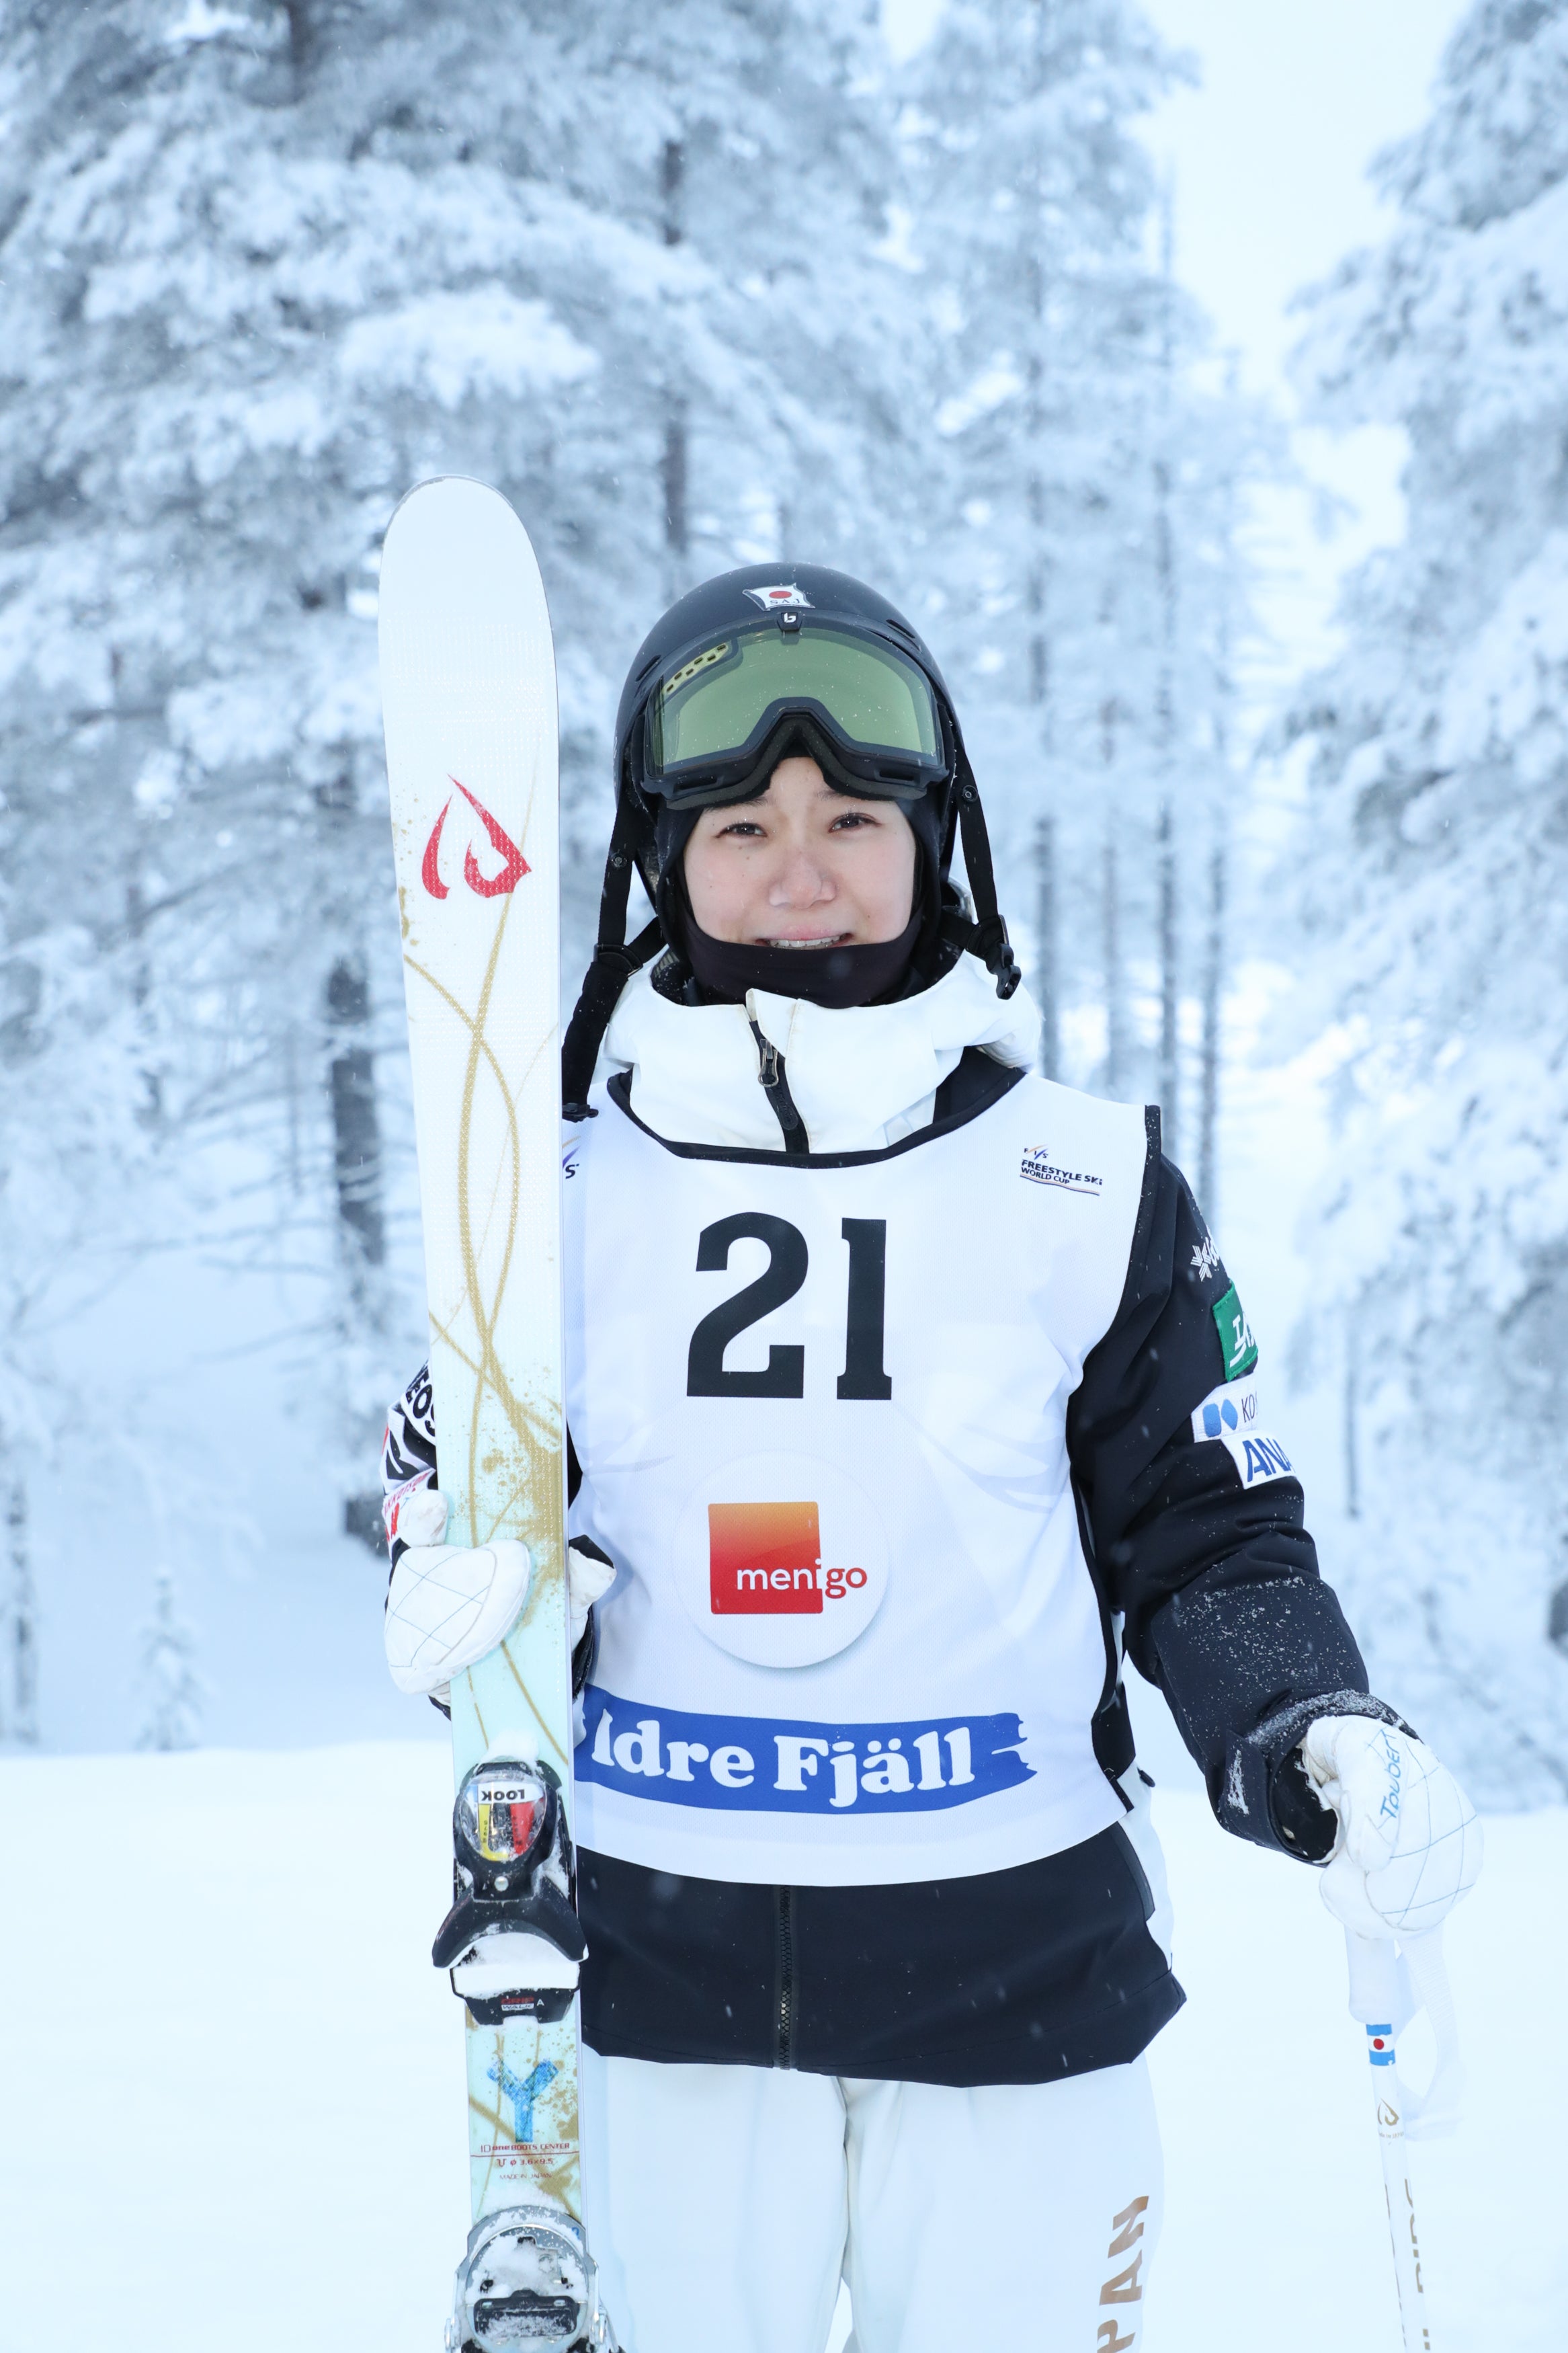 Photo of Yuma Taguchi - Mogul Skier